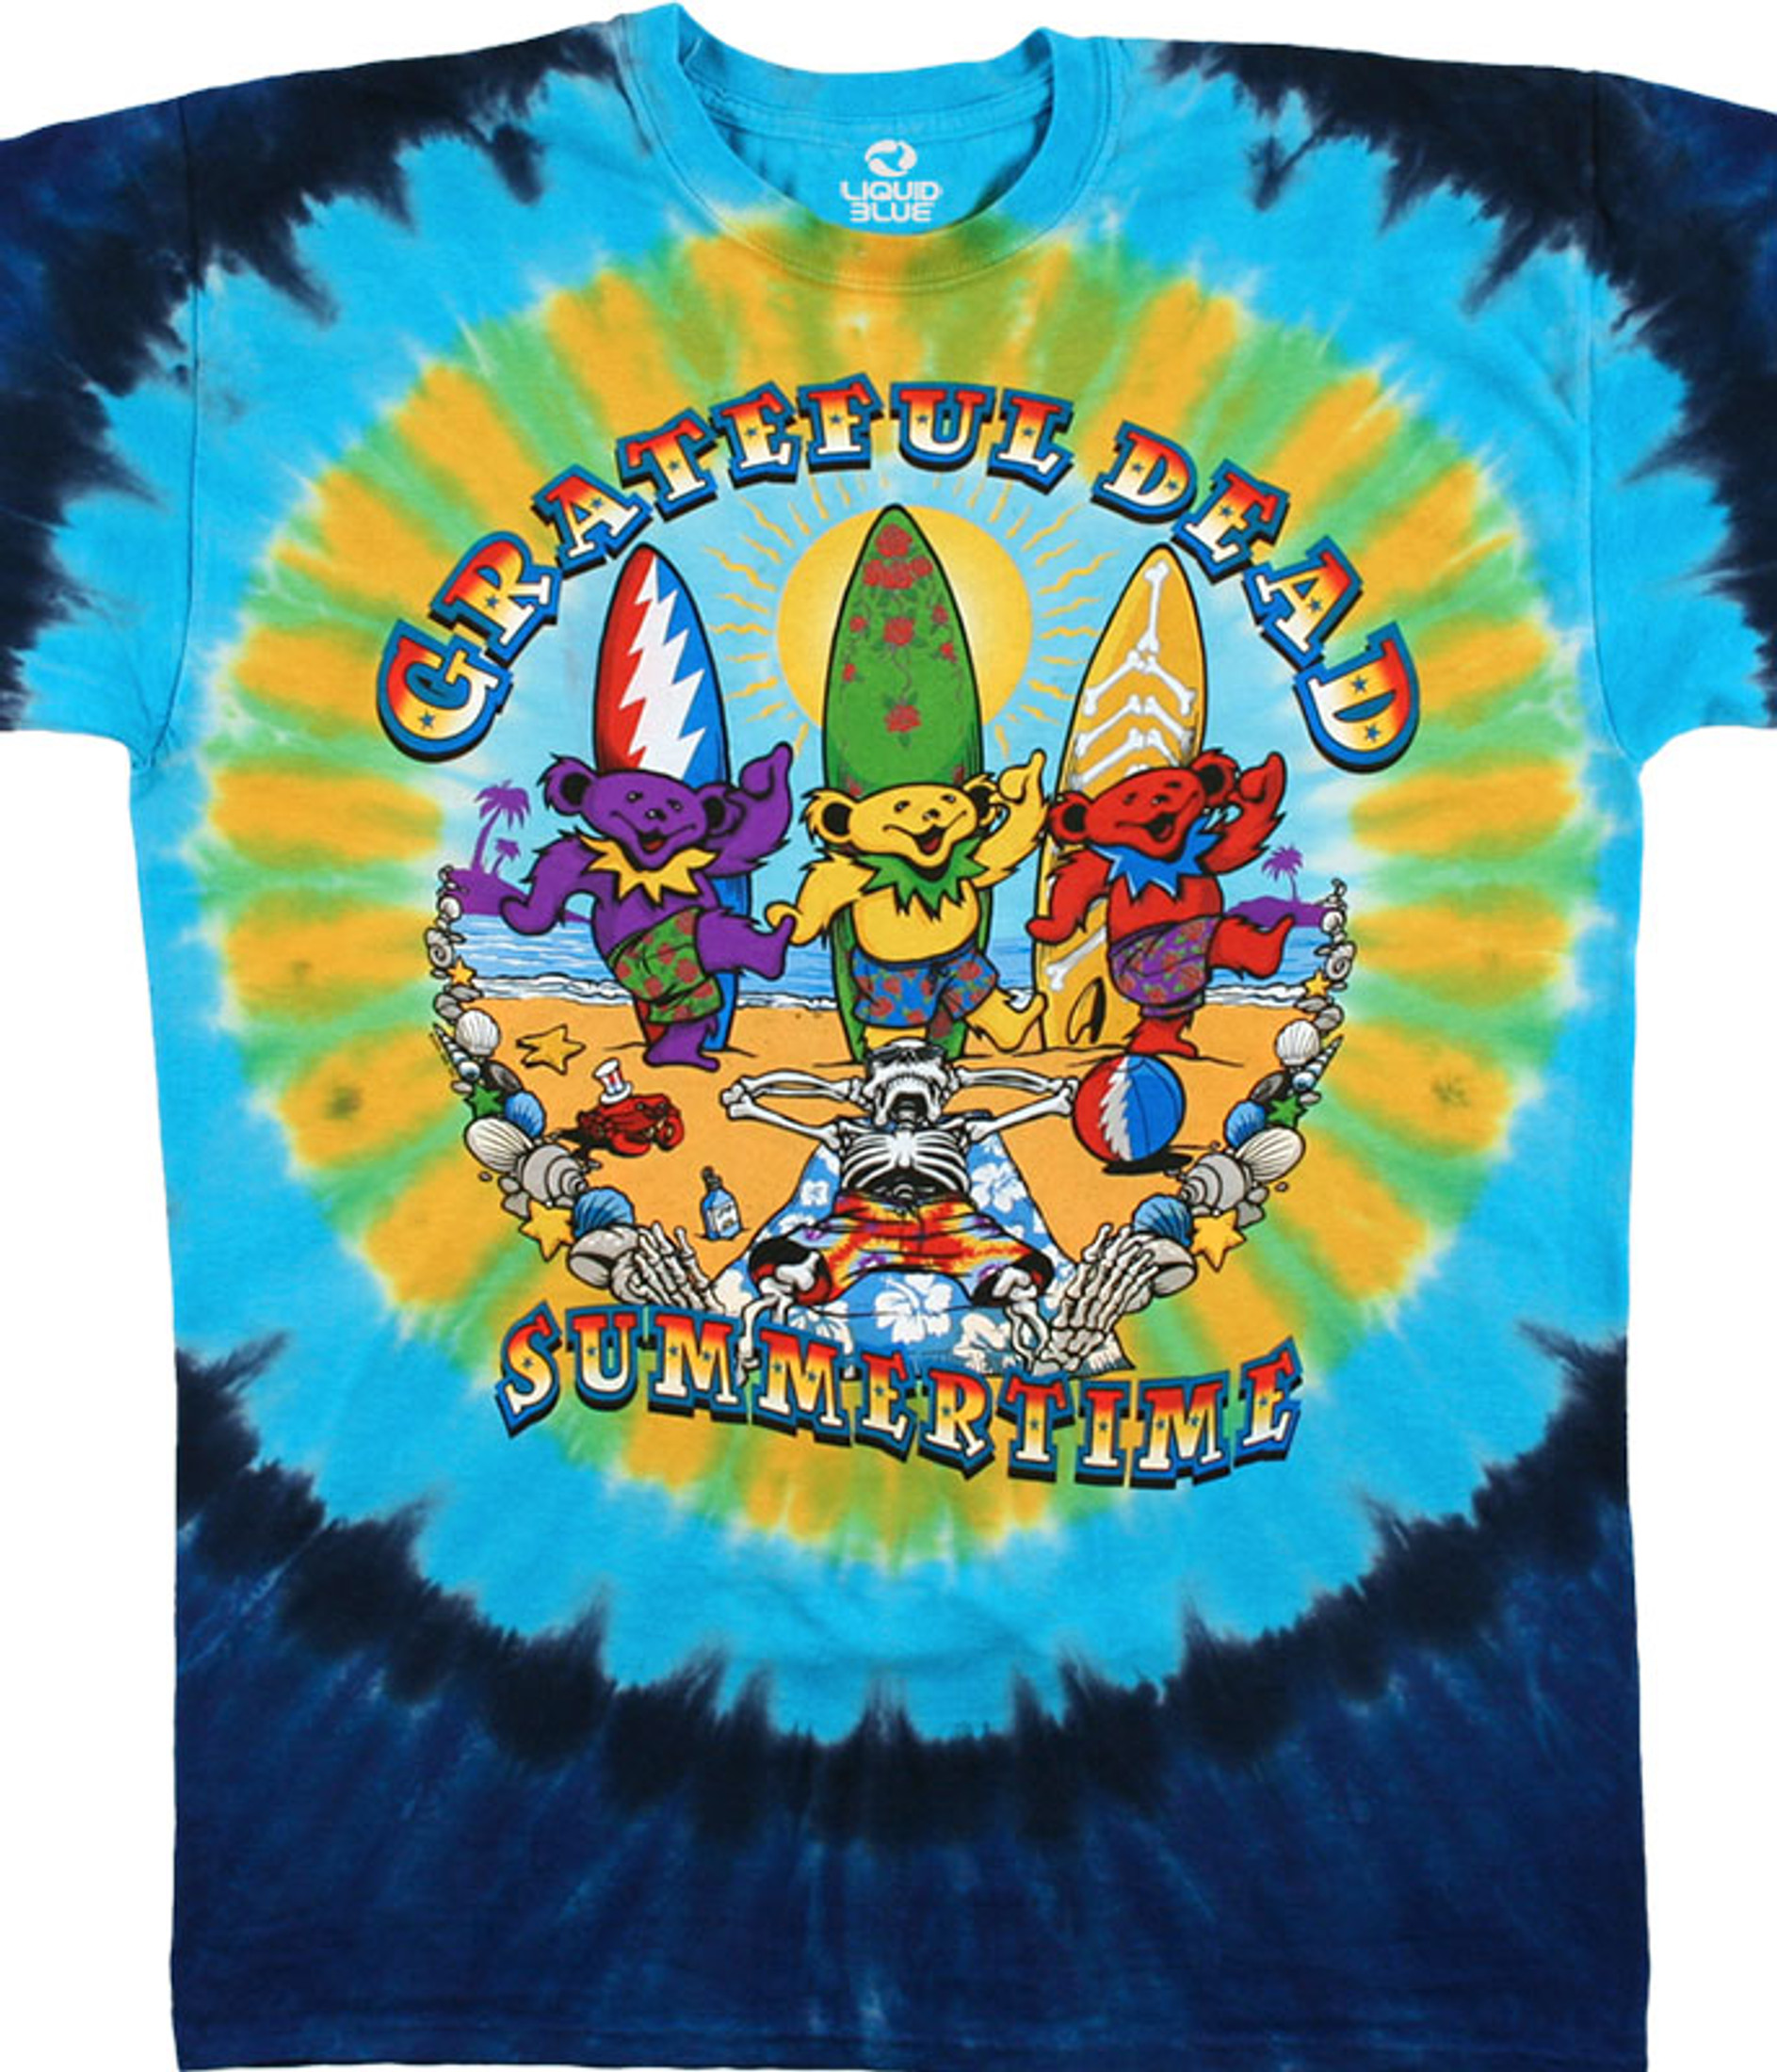 Grateful Dead Never Dead Tie Dye Men's Shirt – 28th Street Beach Variety